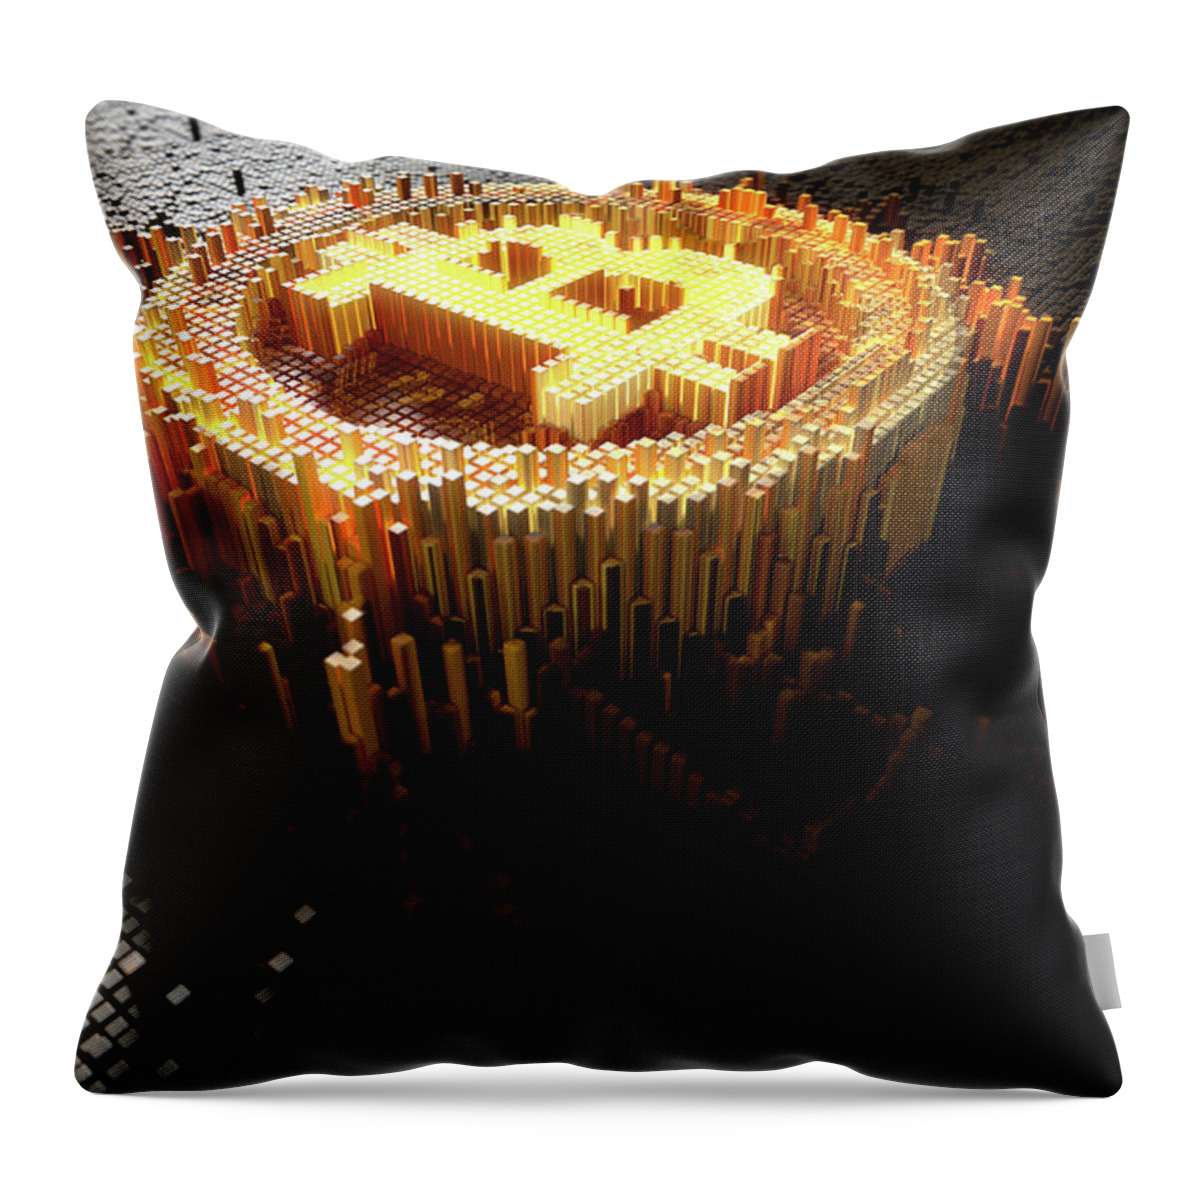 Bitcoin Throw Pillow featuring the digital art Pixel Bitcoin Concept #4 by Allan Swart